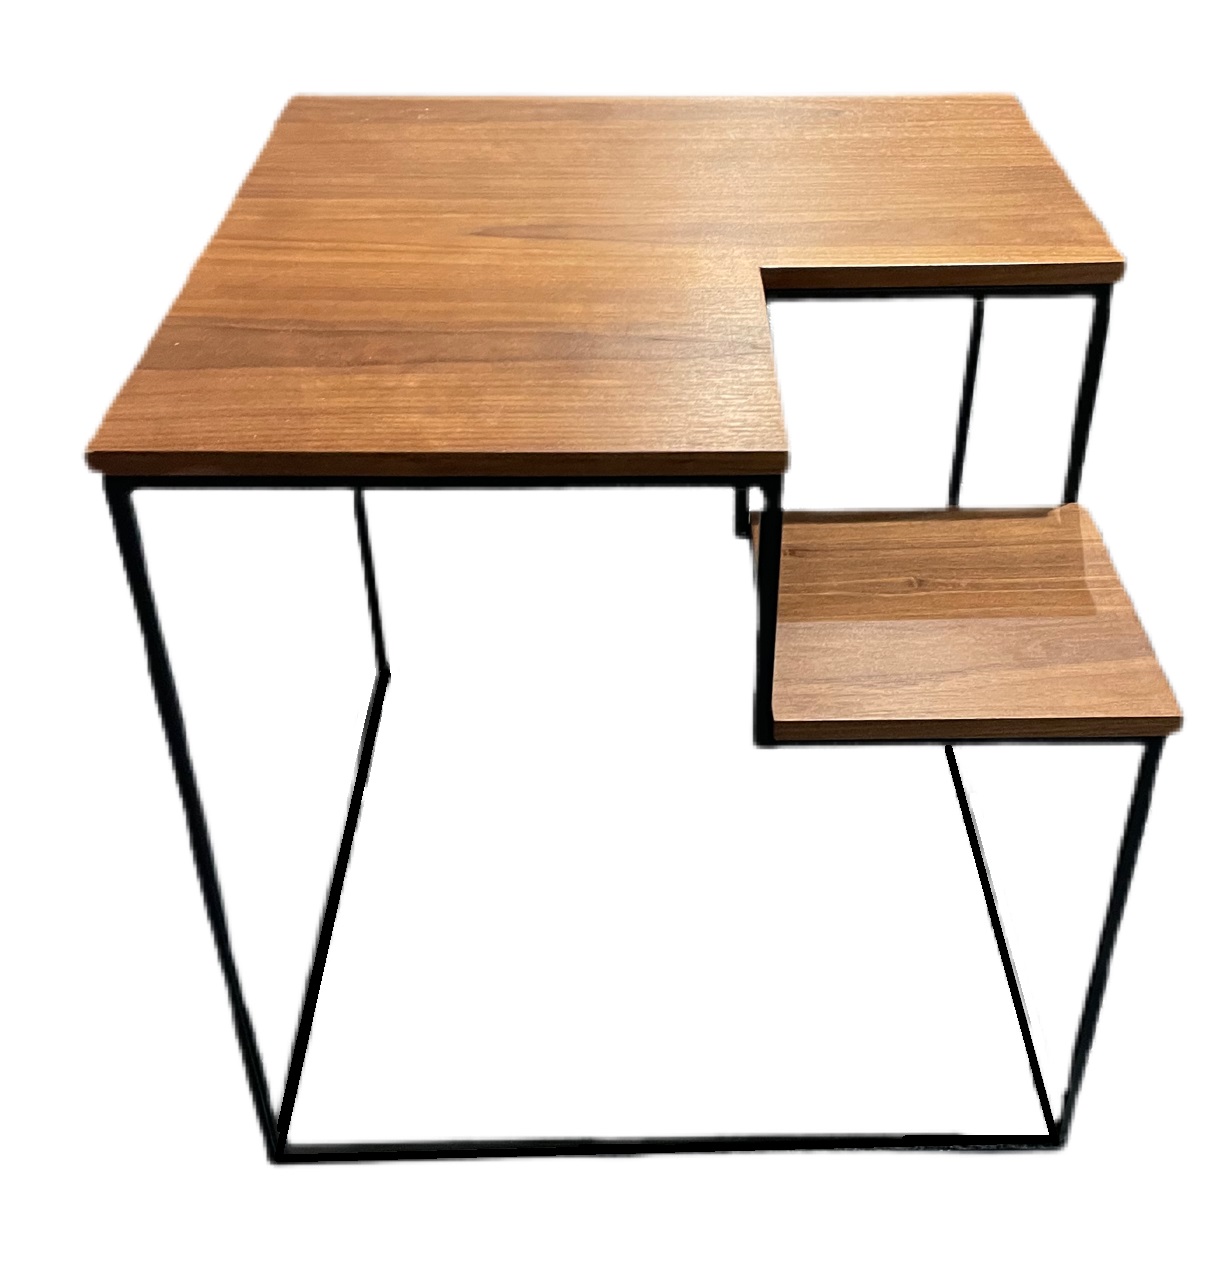 Side Table DMD Cube Walnut Top Black Frame W500 x D500 x H500mm